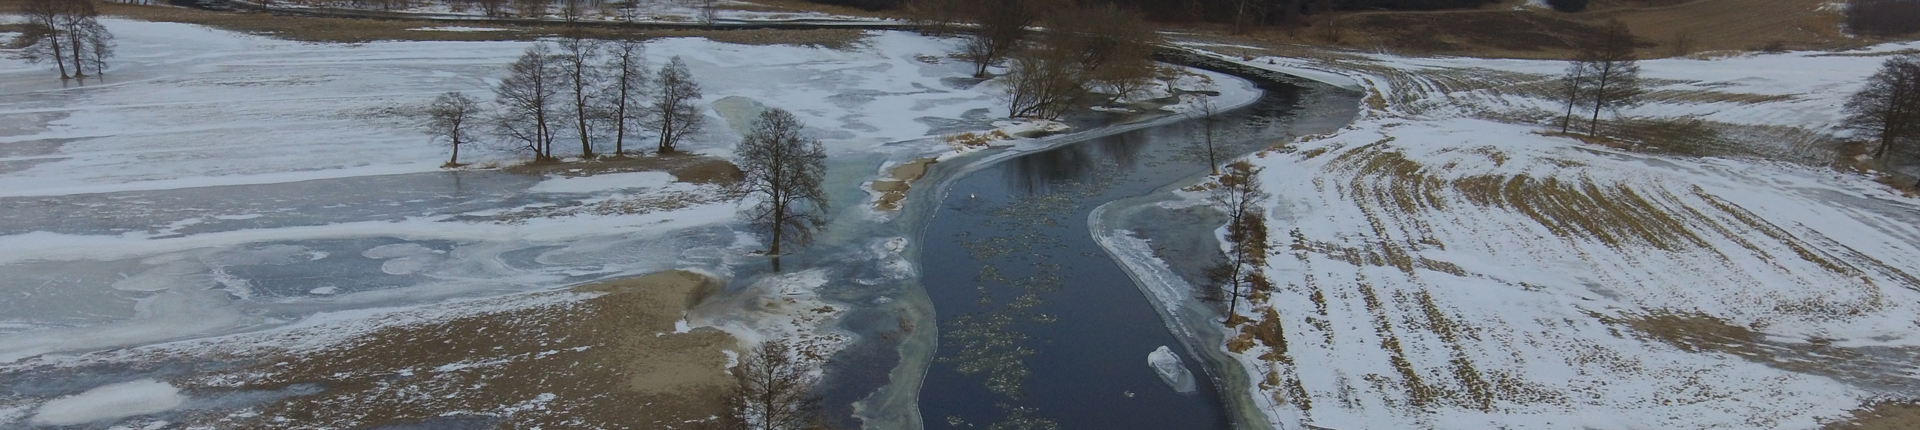 The Drwęca River